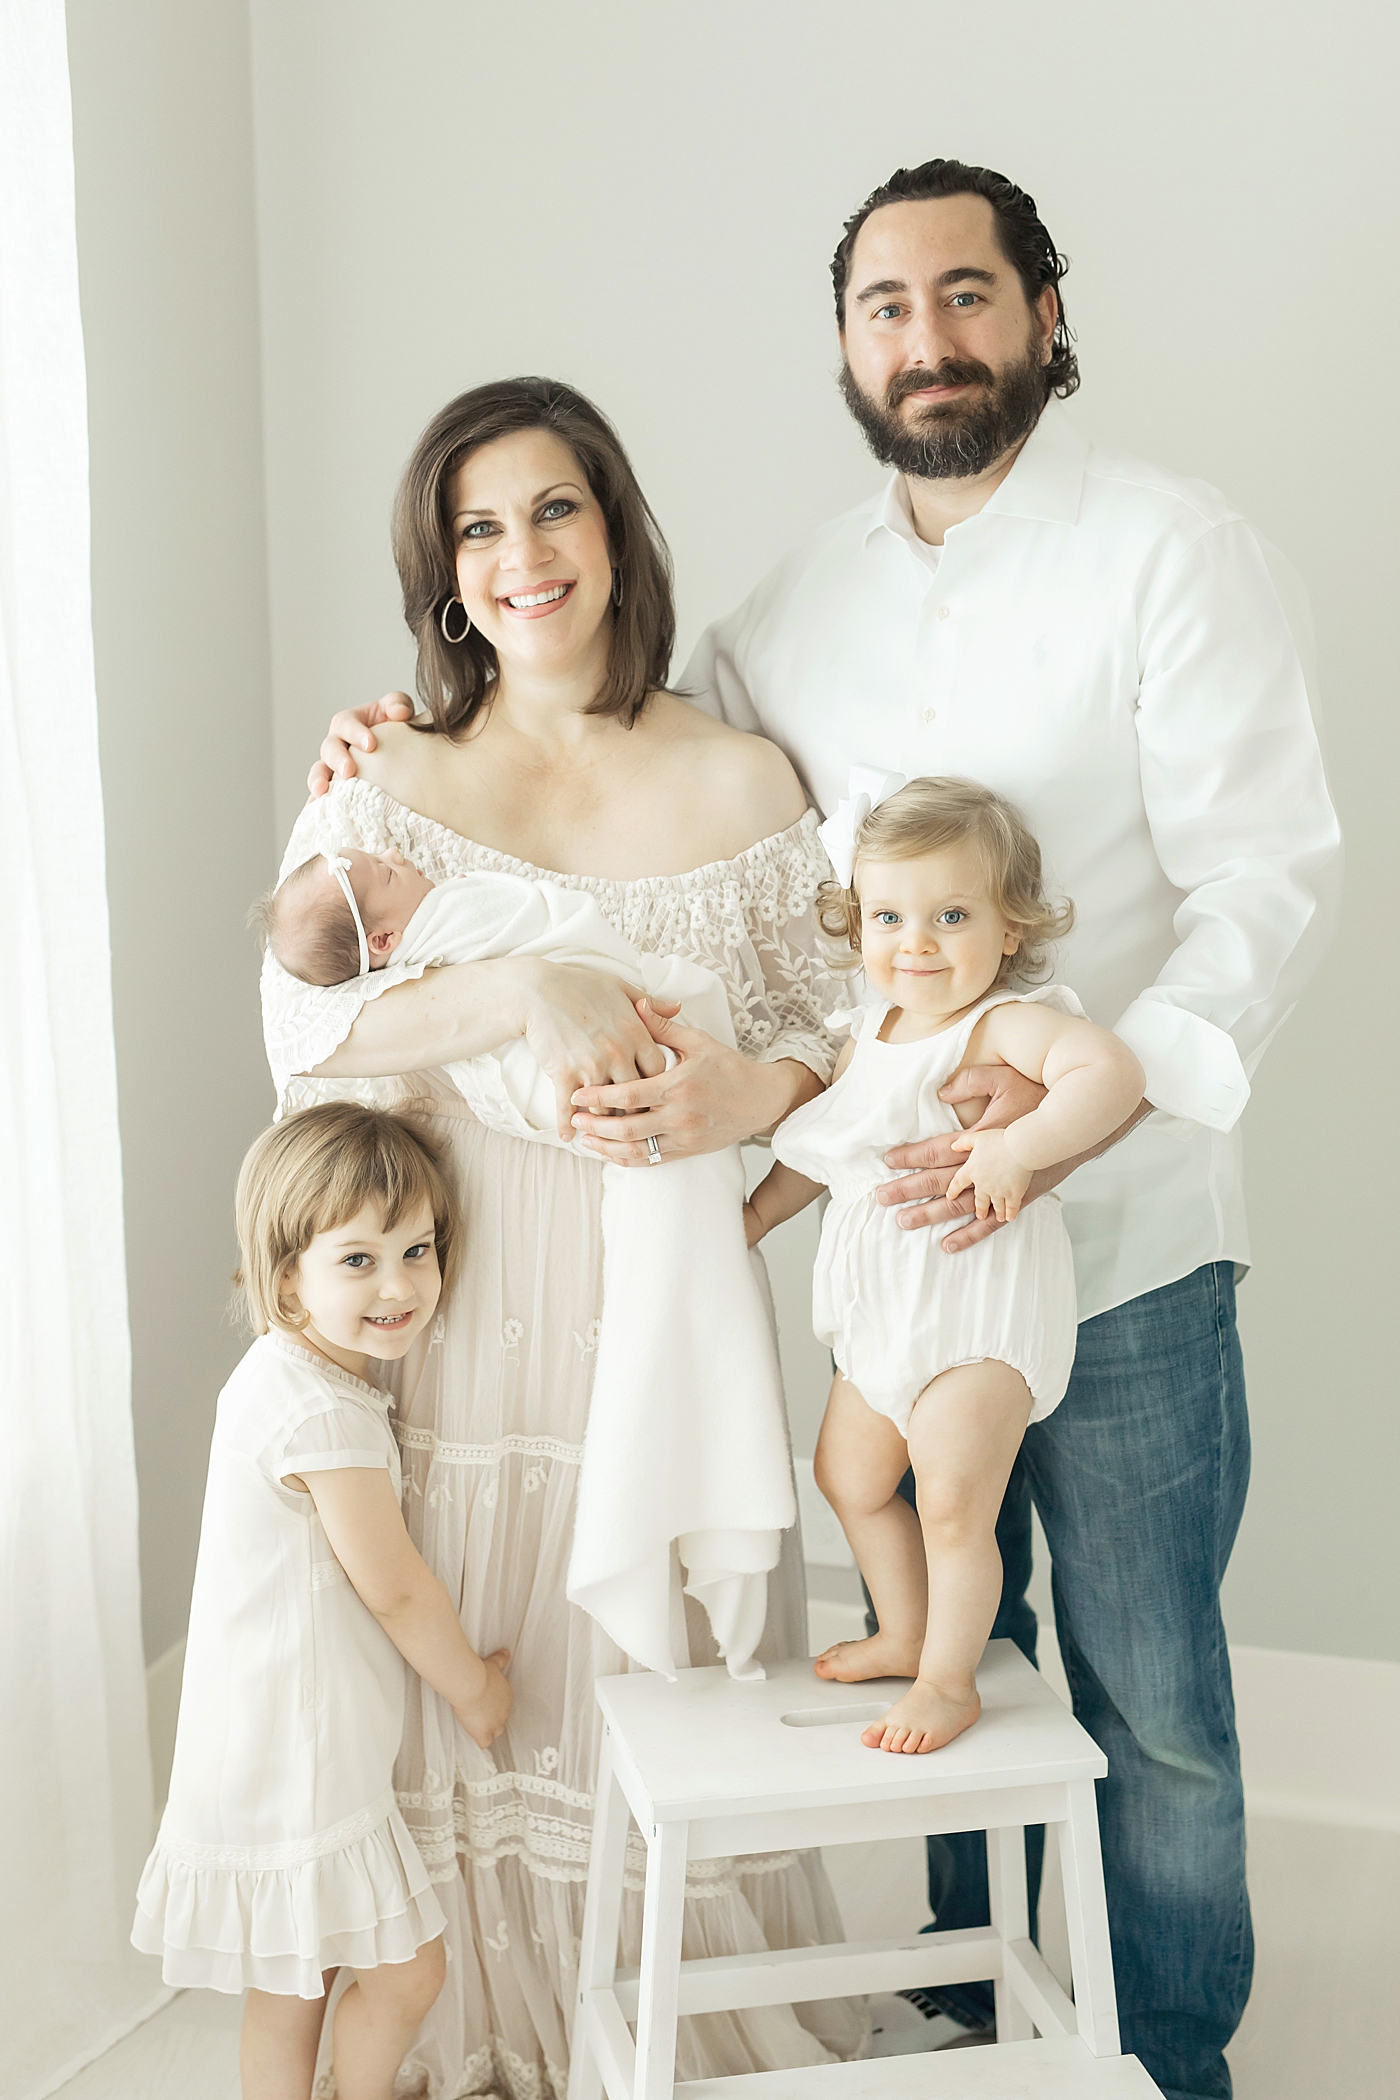 Timeless family portrait taken in Fresh Light Photography's newborn studio in The Heights. 